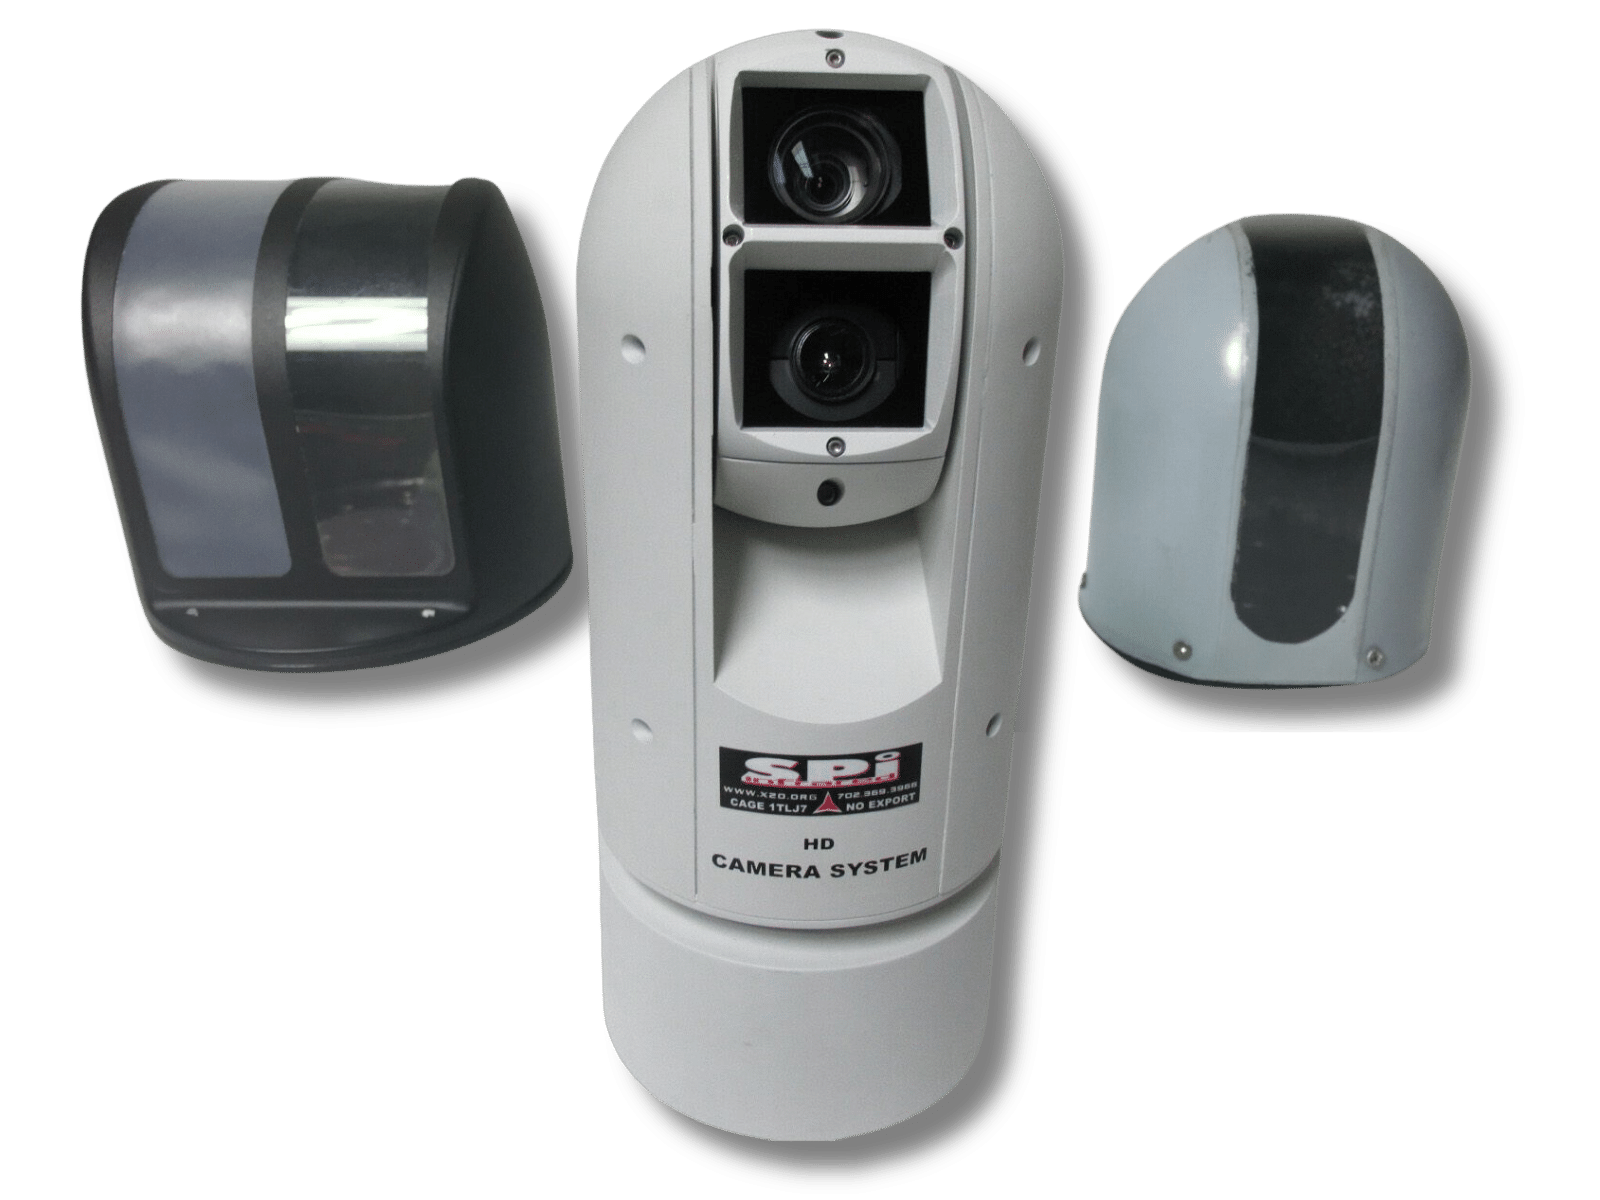 M3D M4D and M5D thermal imaging cameras